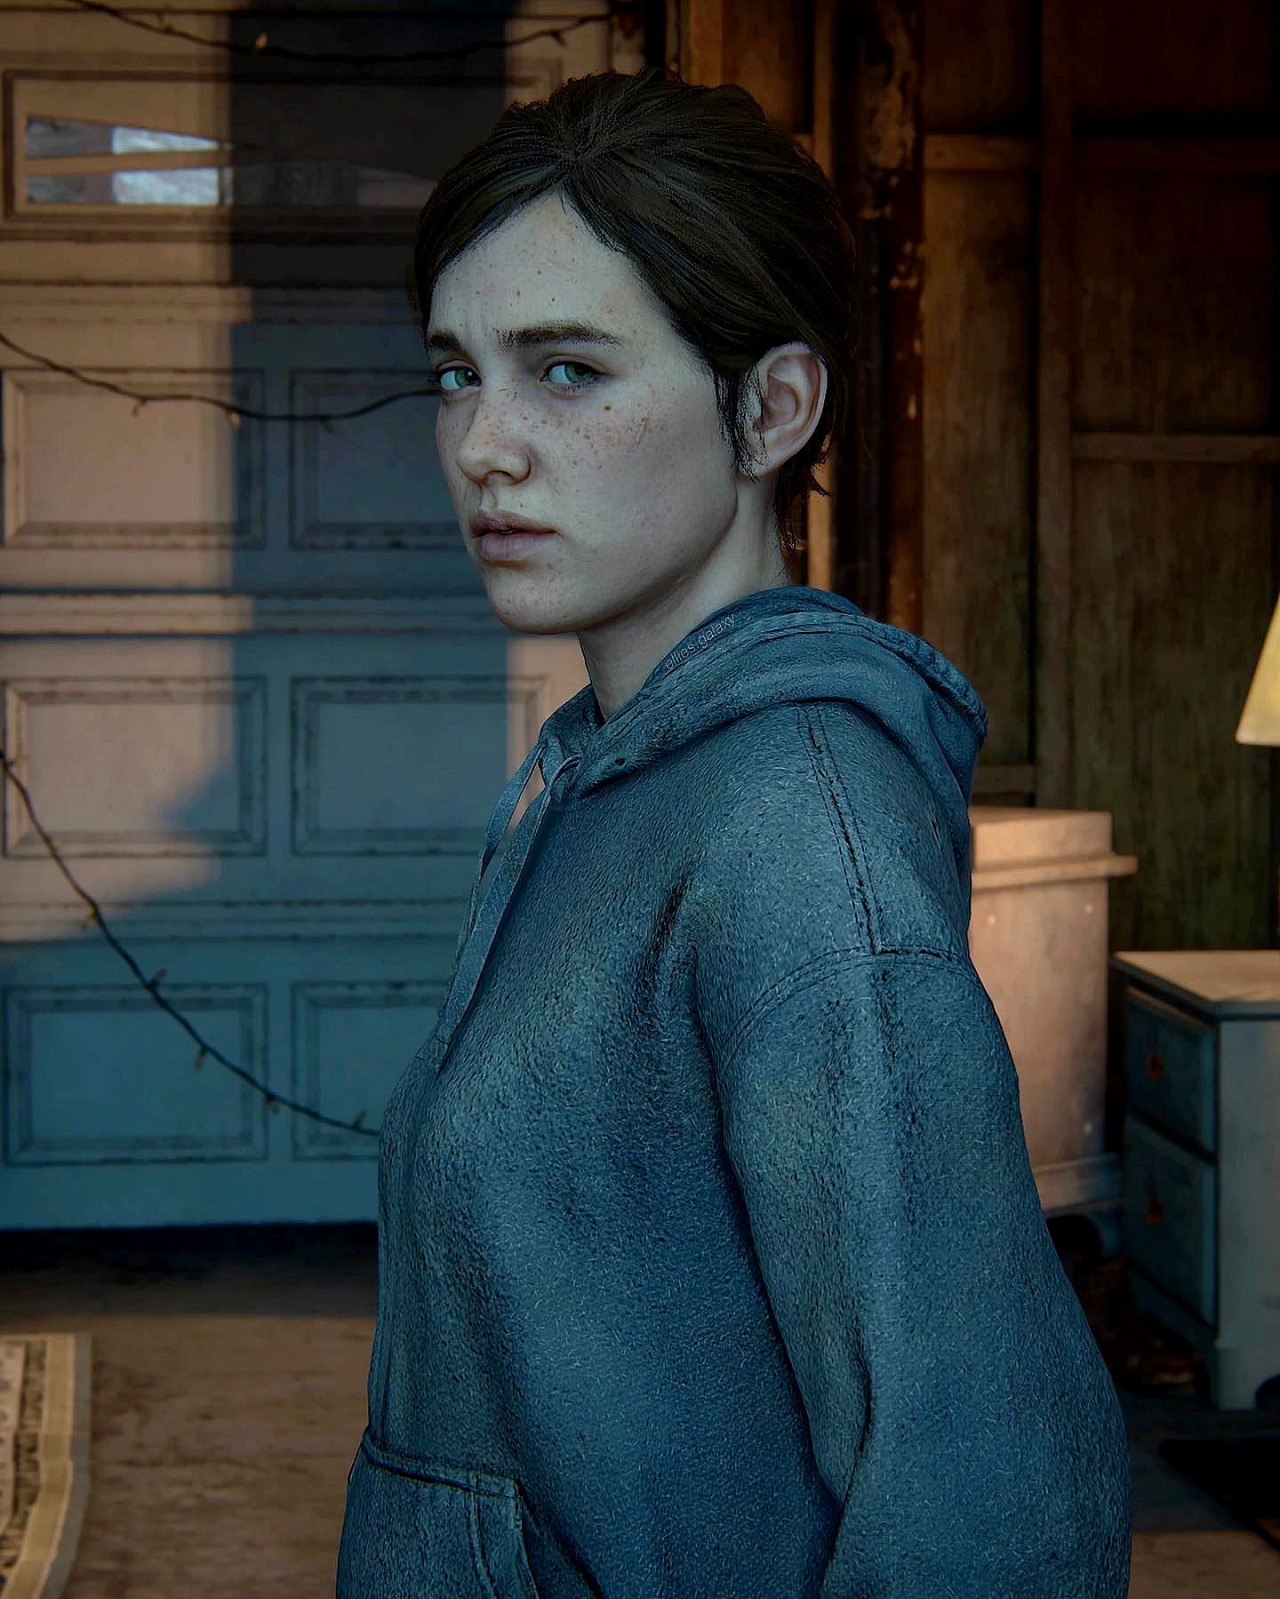 The Last of Us II The Last of Us 2 The Last of Us Part 2 #Ellie